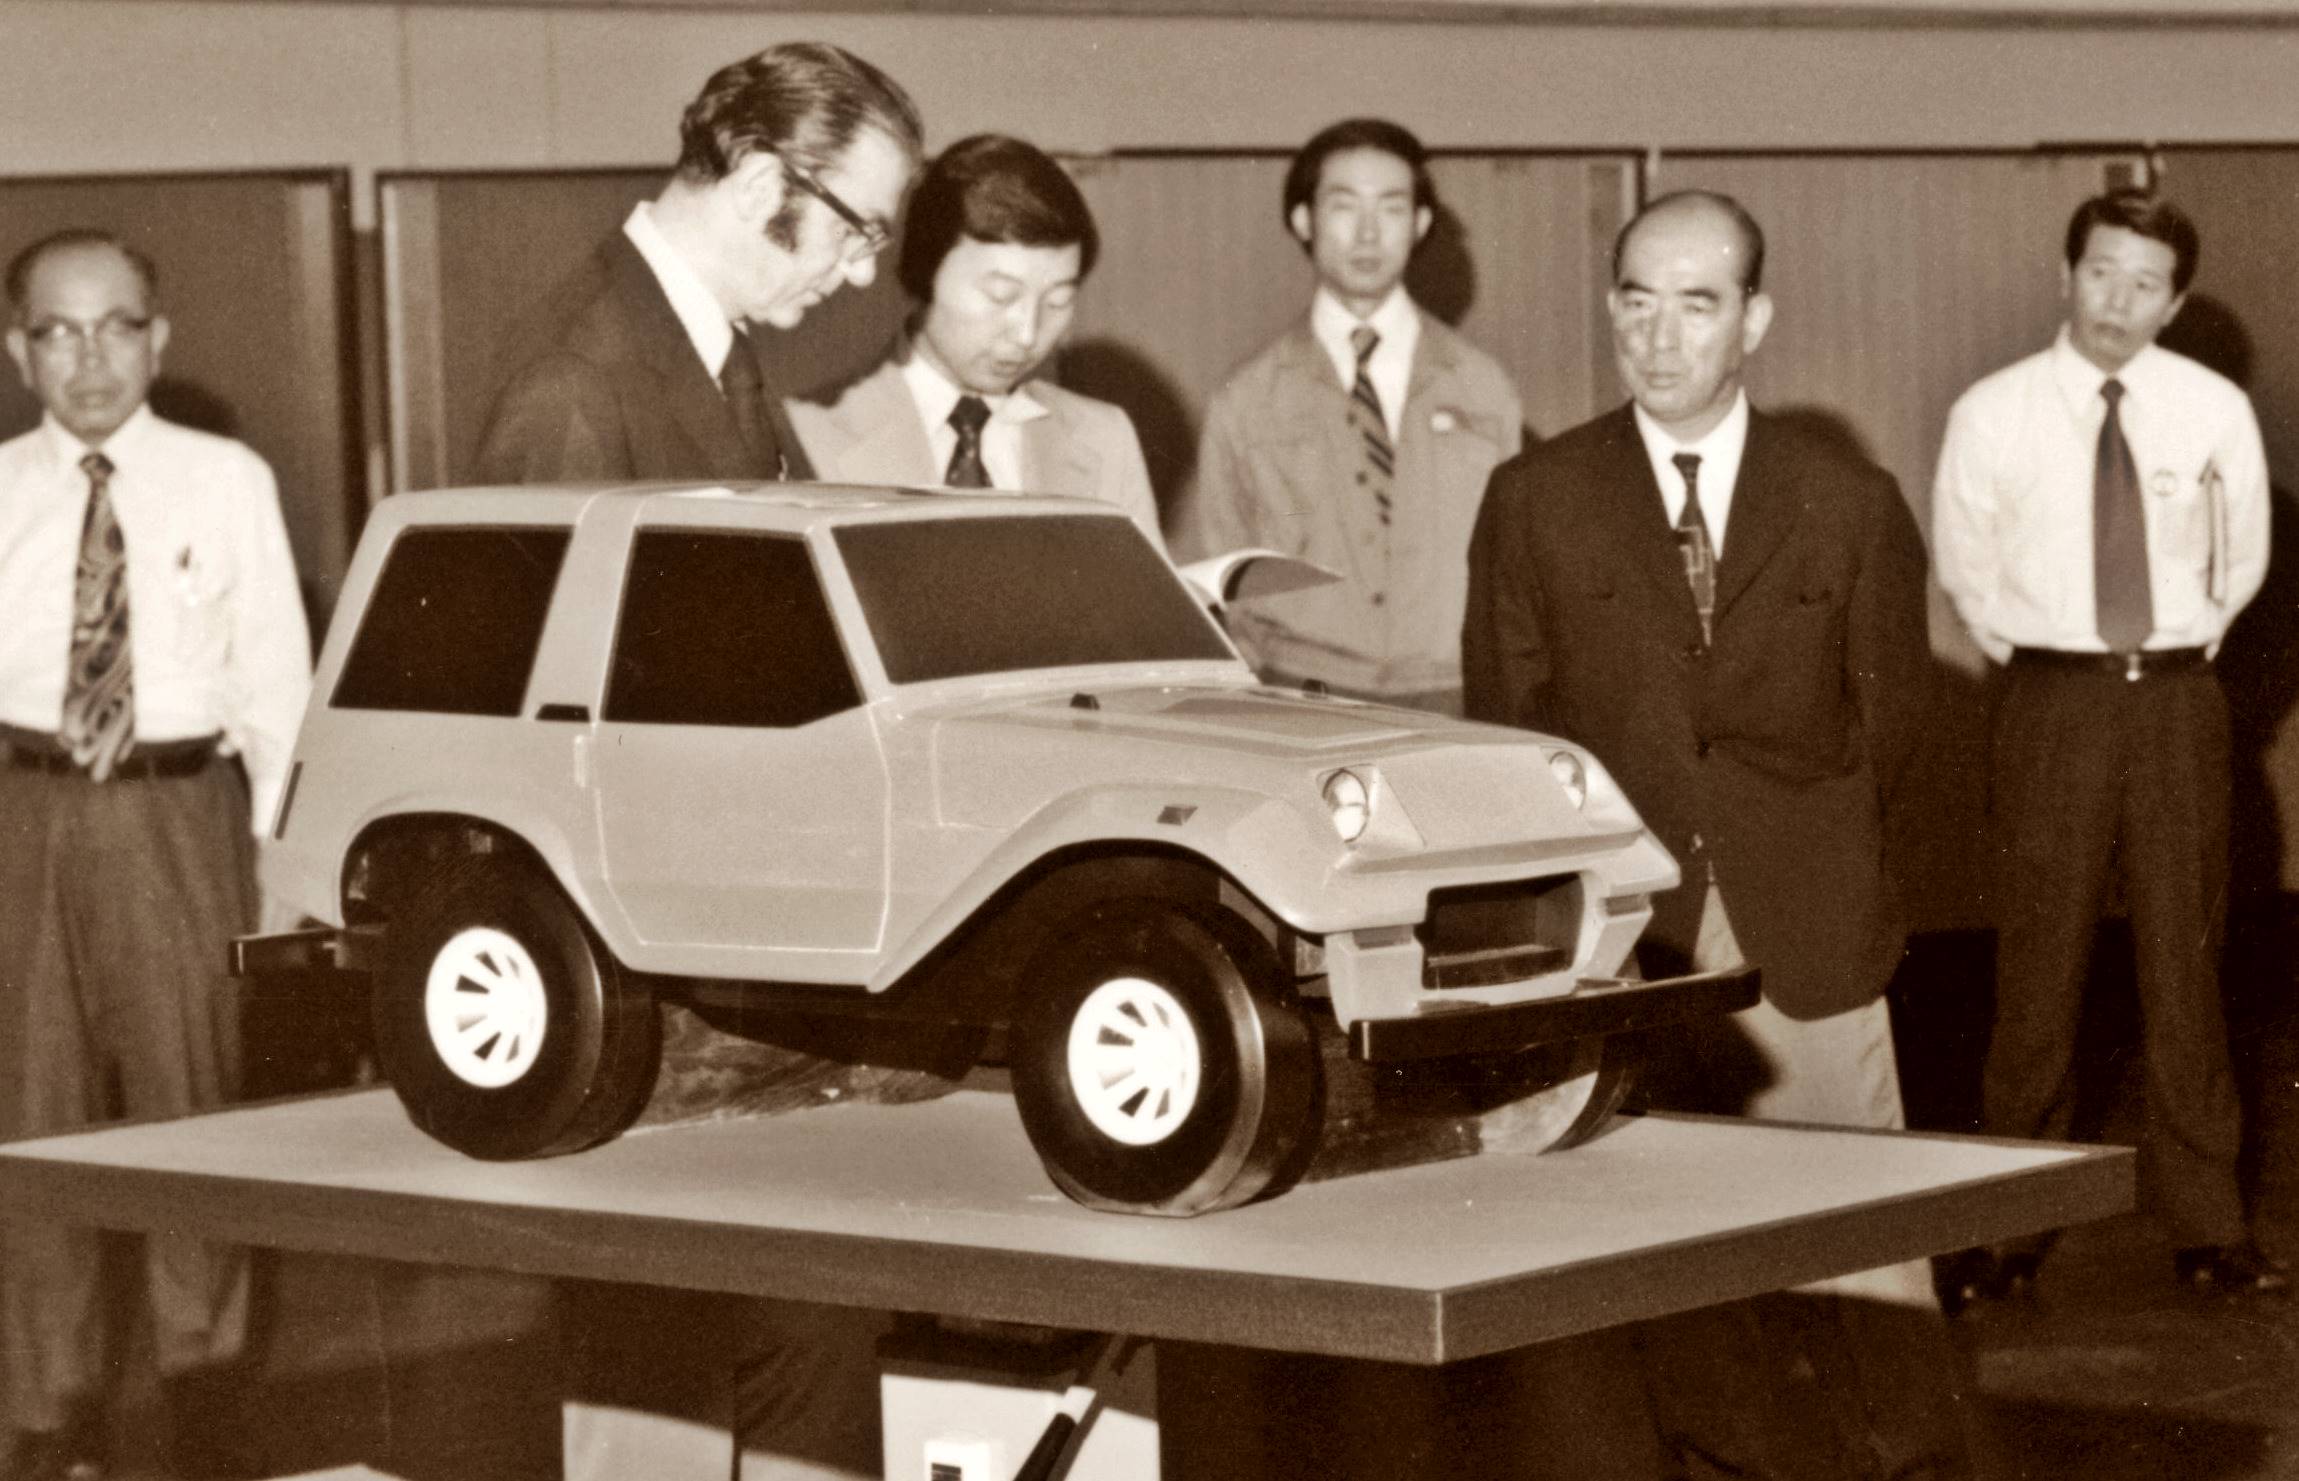 Toyot FJ Land Cruiser concept [1974]